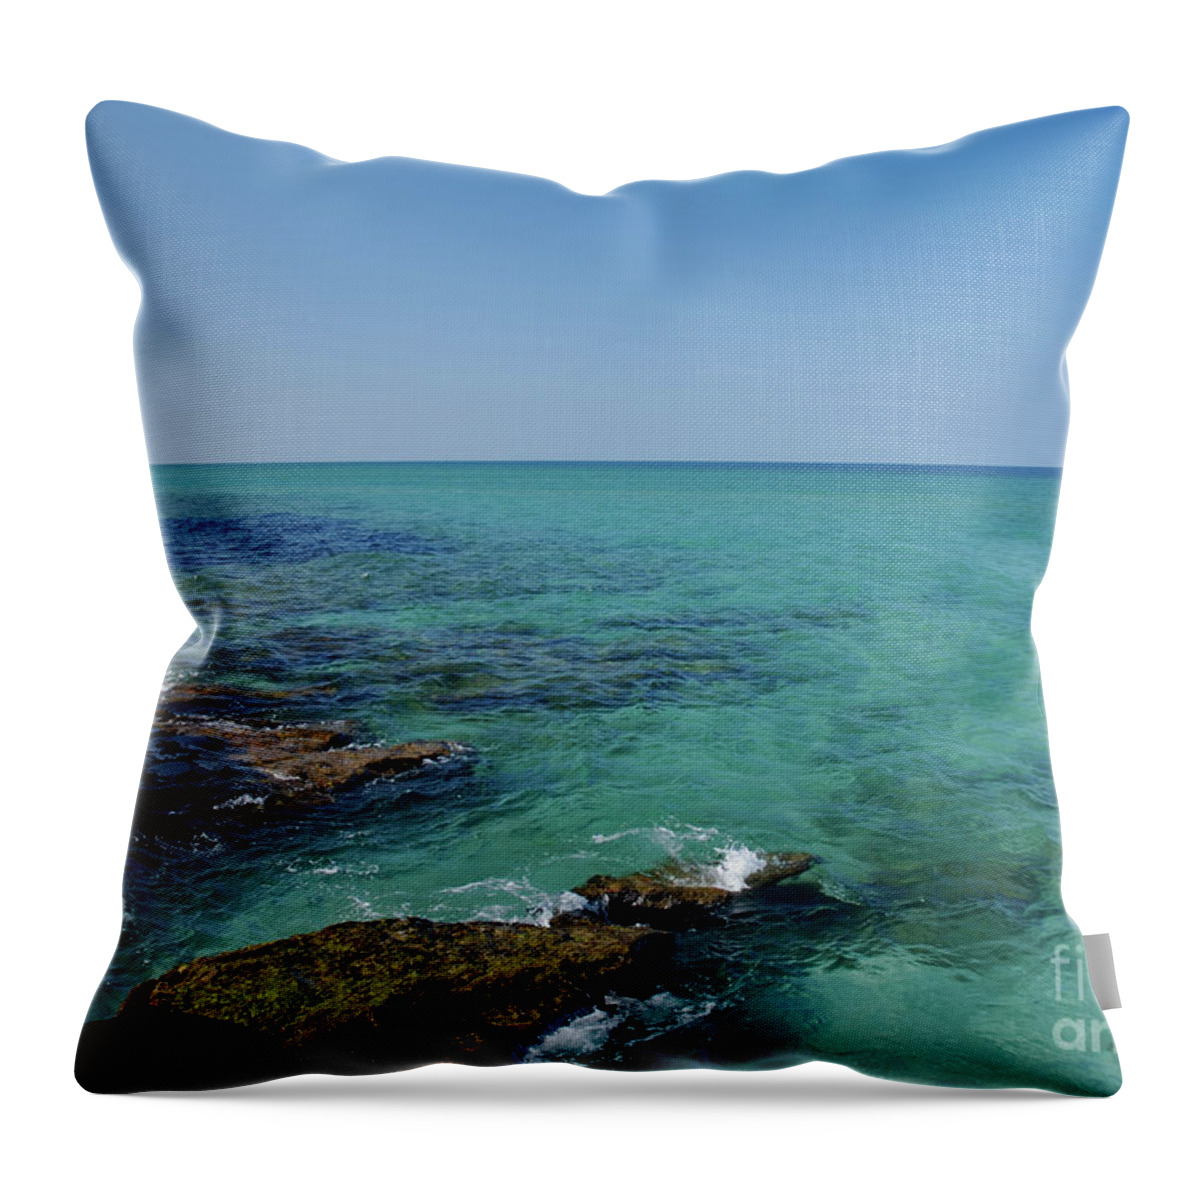 Ocean Reef Park Throw Pillow featuring the photograph 12- Ocean Reef Park by Joseph Keane